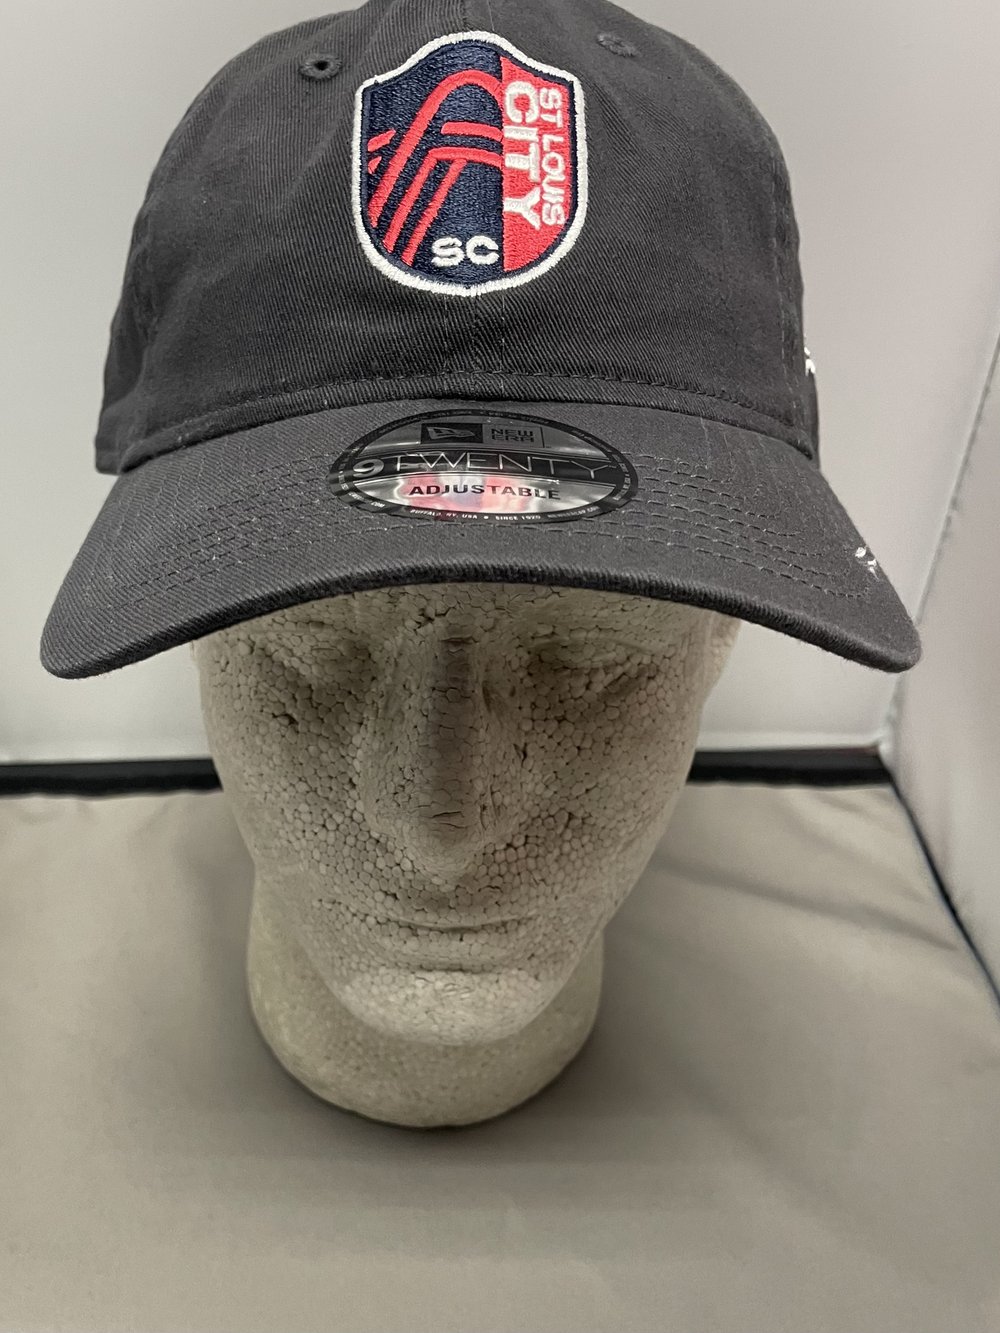 St Louis city SC Adjustable low profile grey Ballcap — Hats N Stuff